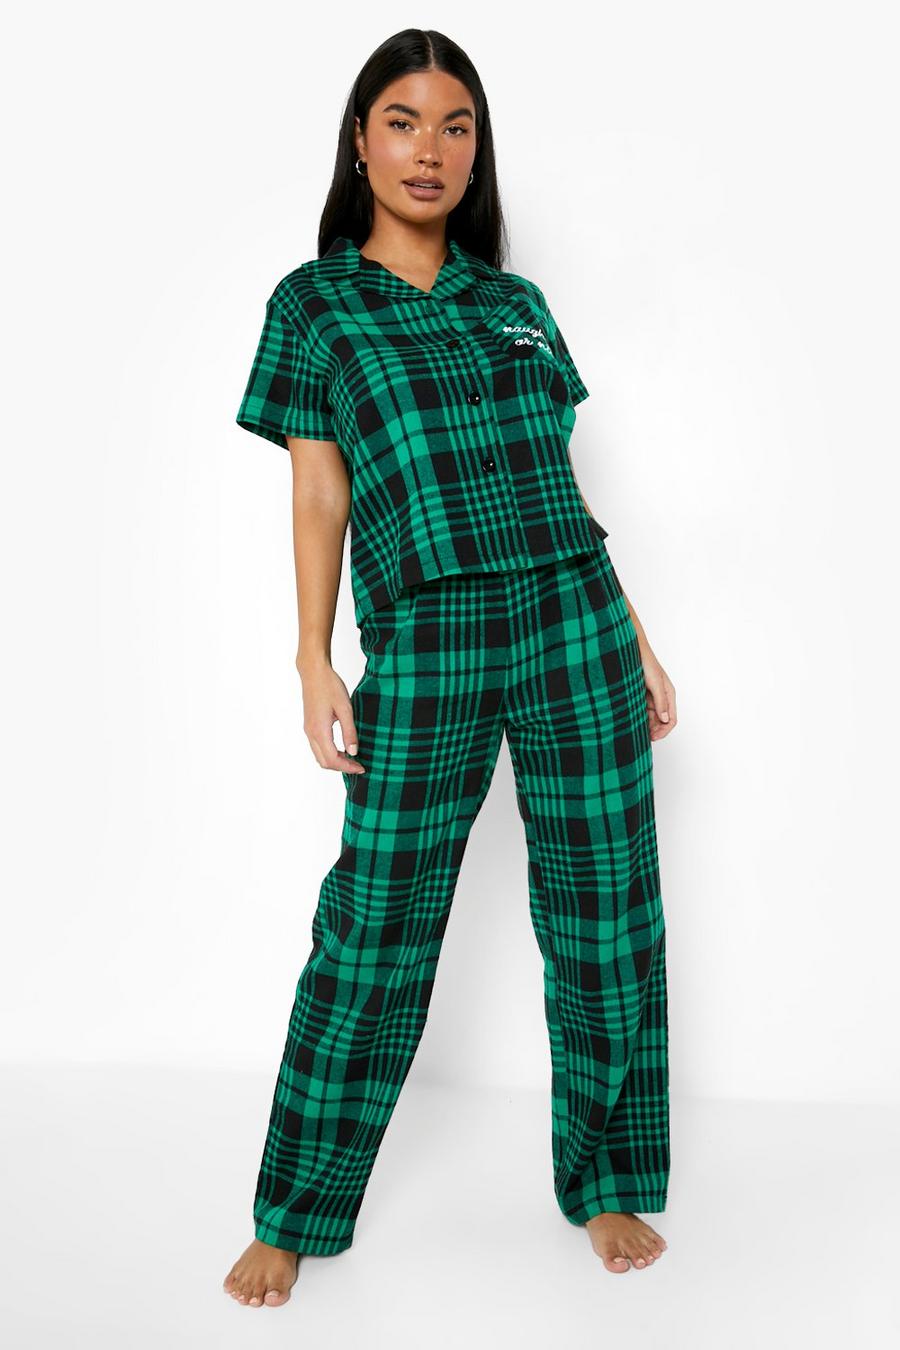 Pantalón de pijama navideño Naughty or Nice, Green gerde